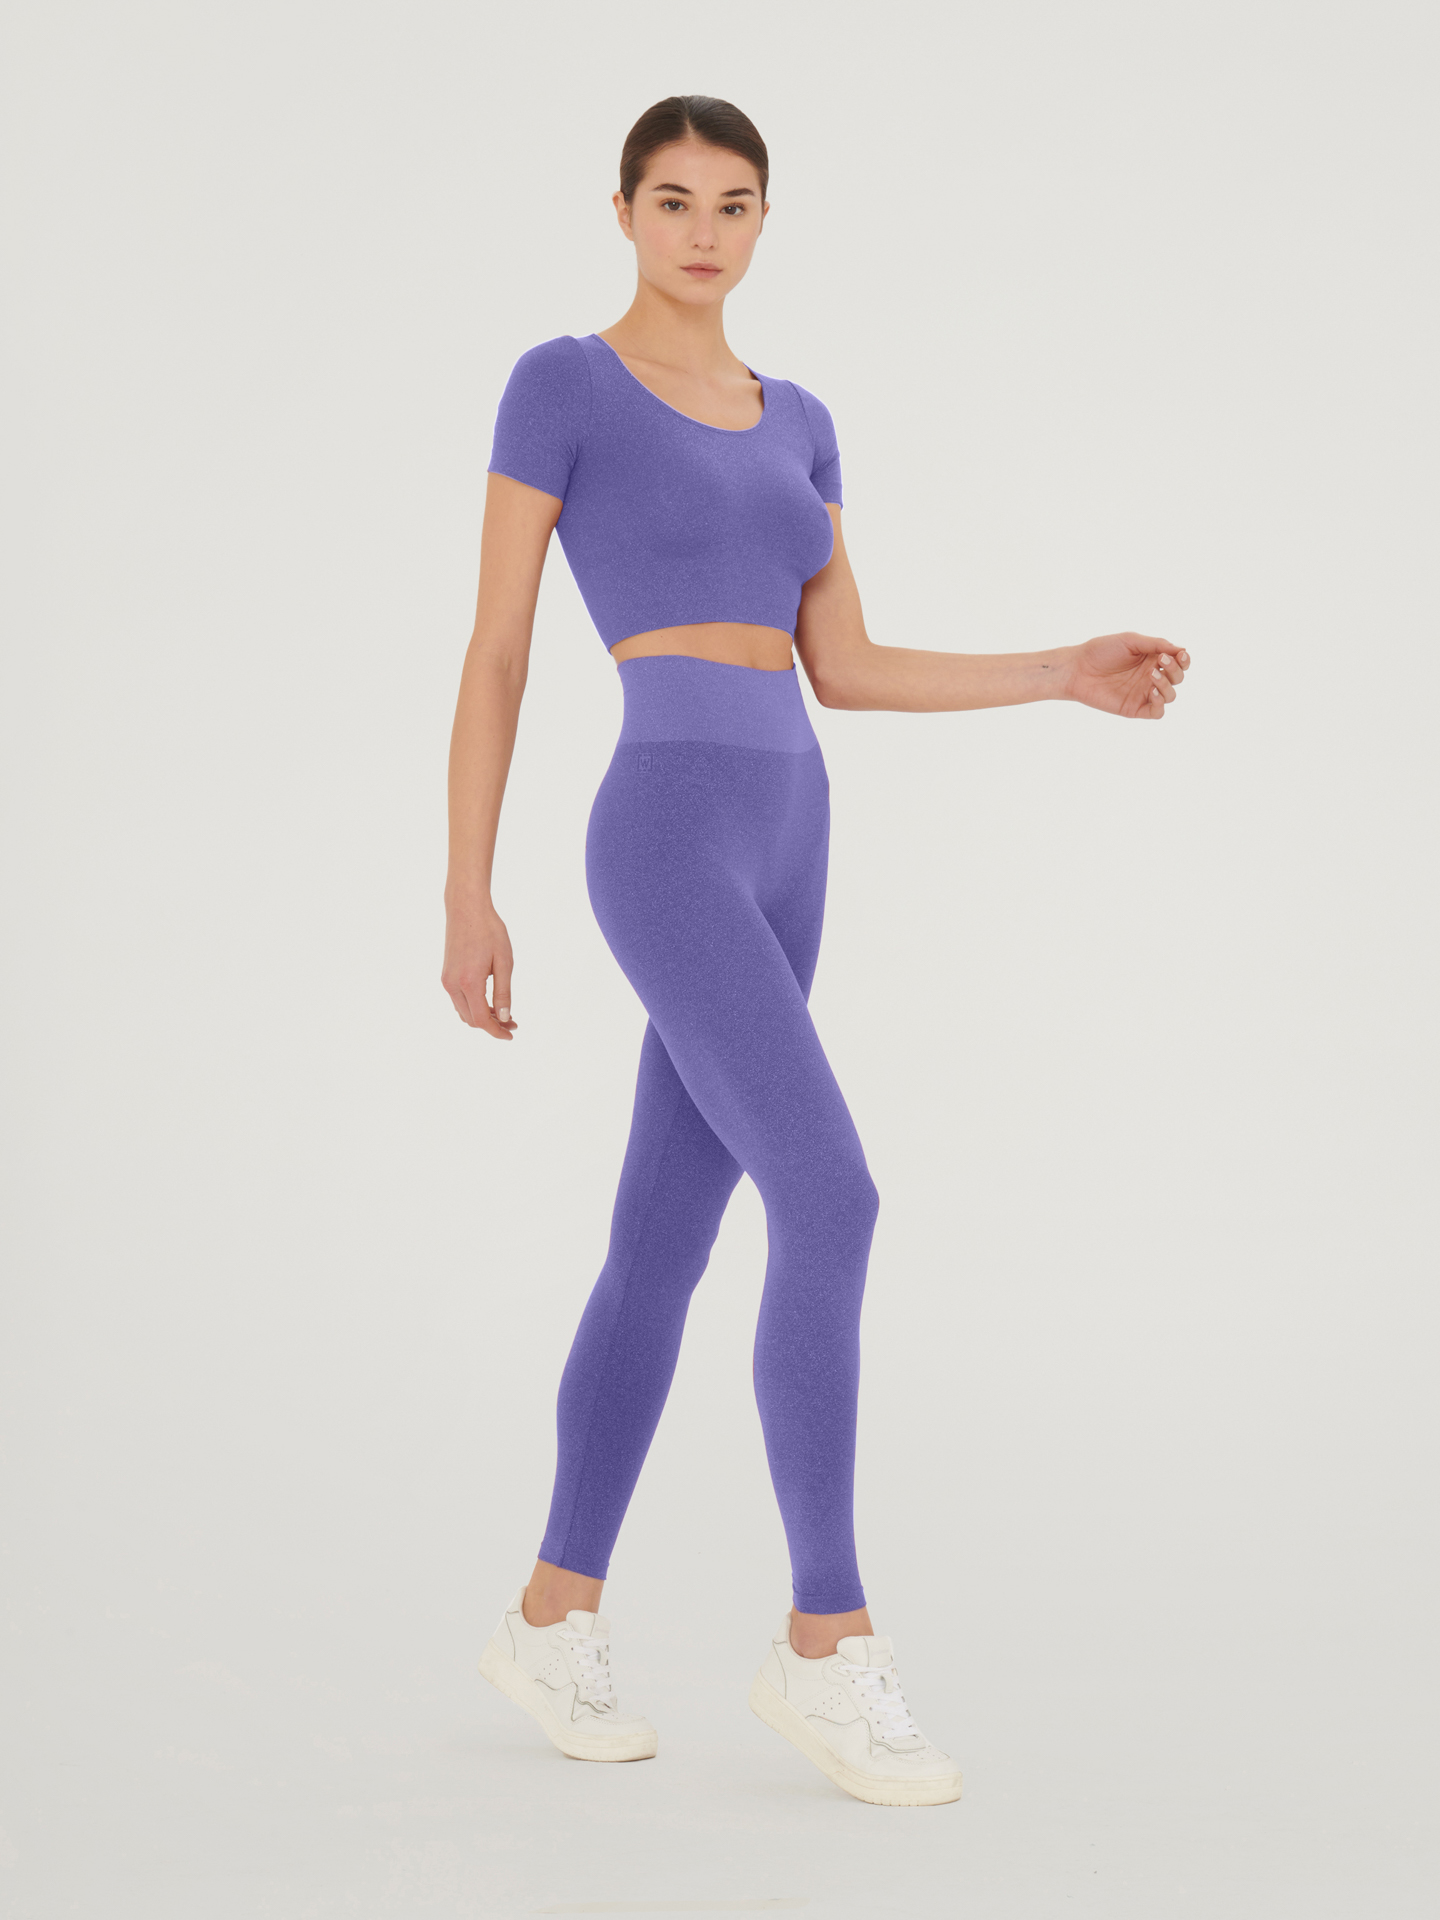 Wolford - Shiny Crop Top, Frau, ultra violet/light aquamarine, Größe: M von Wolford